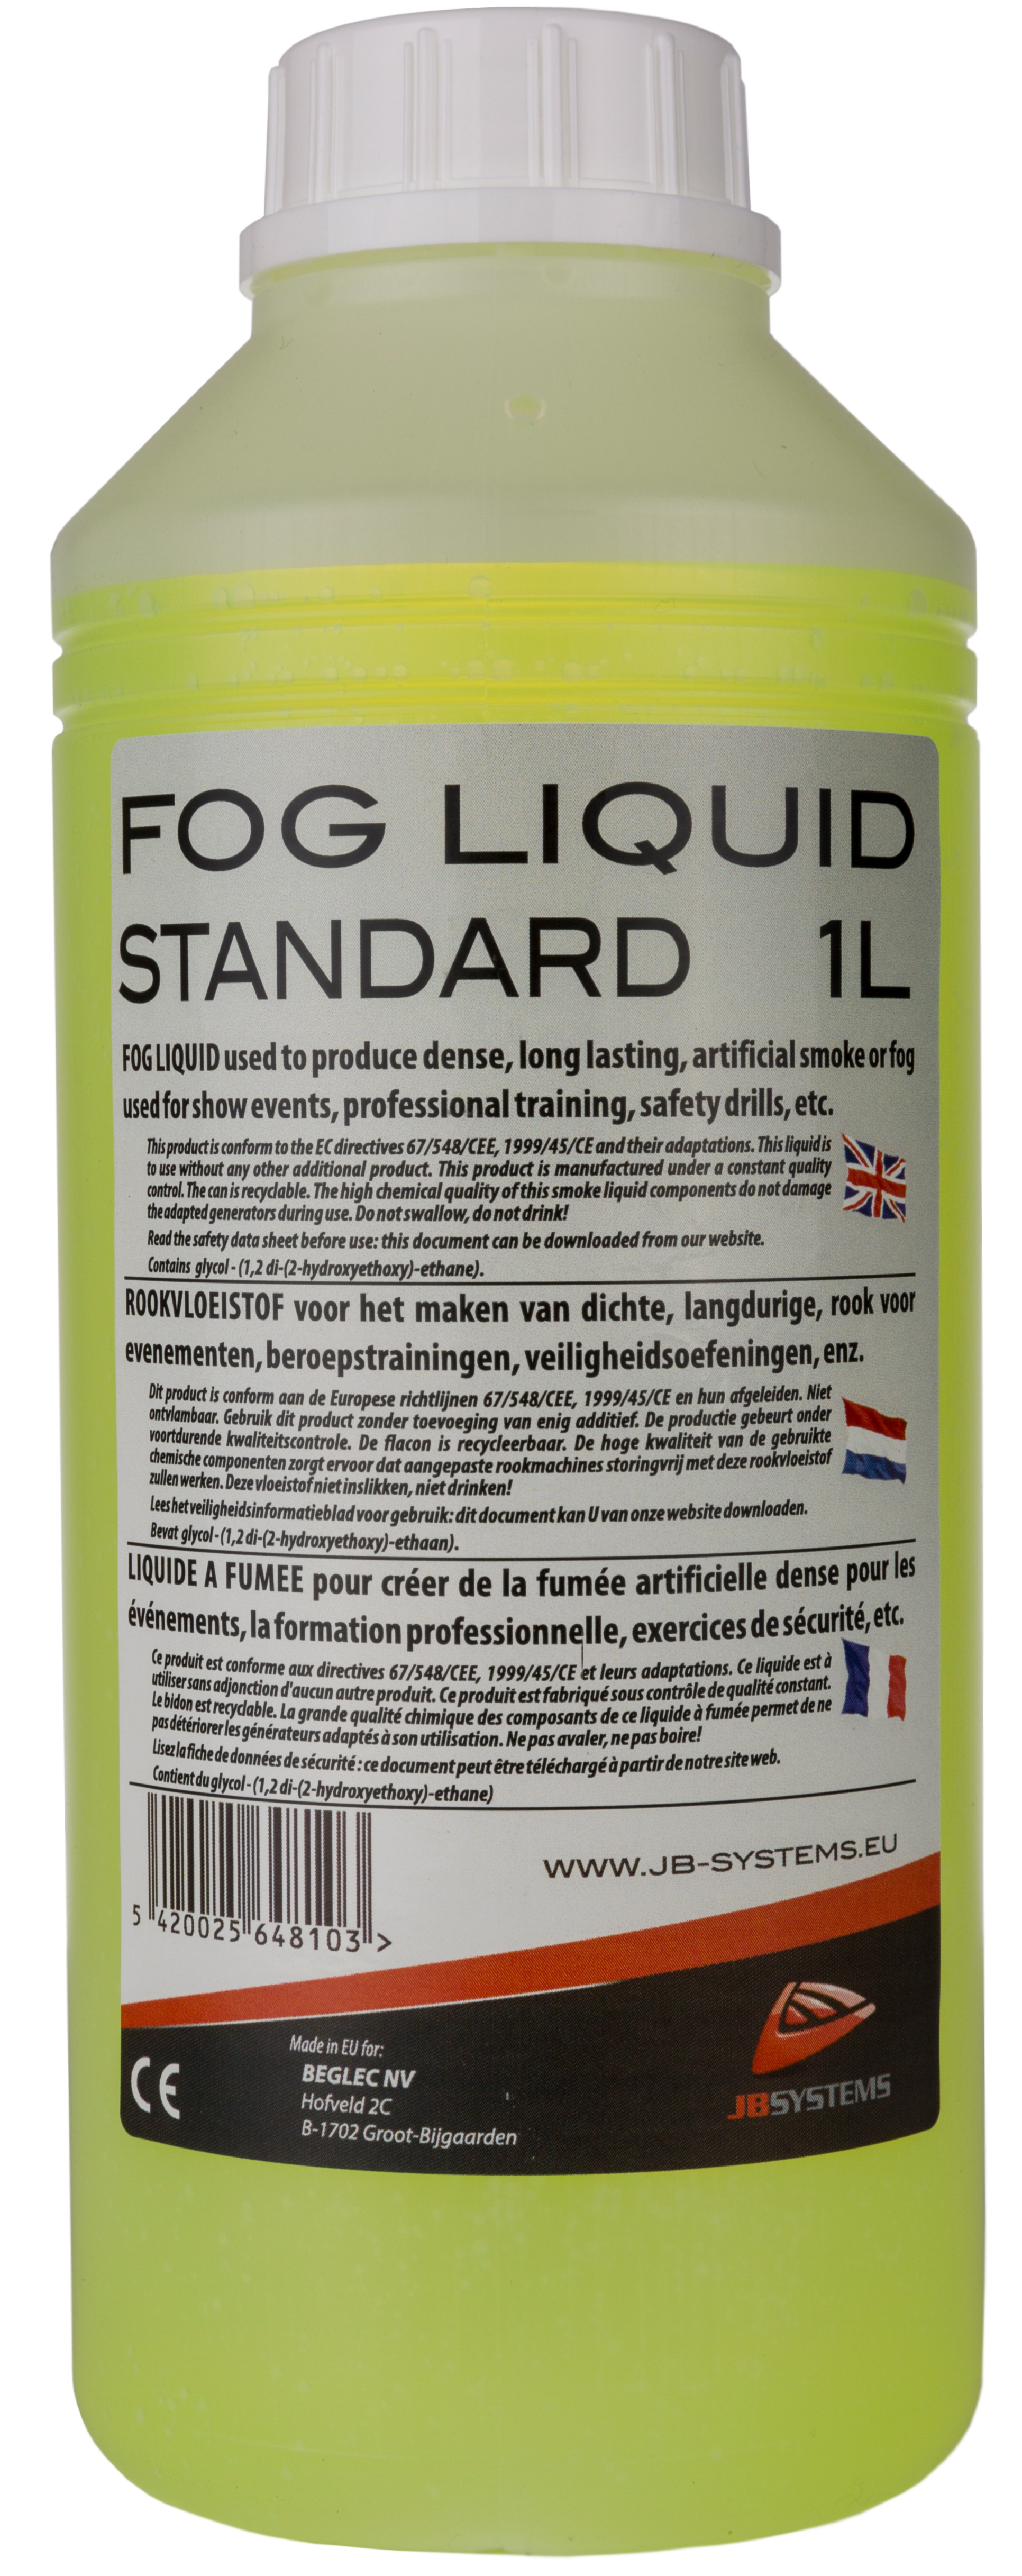 Fogger liquid standard, 1L